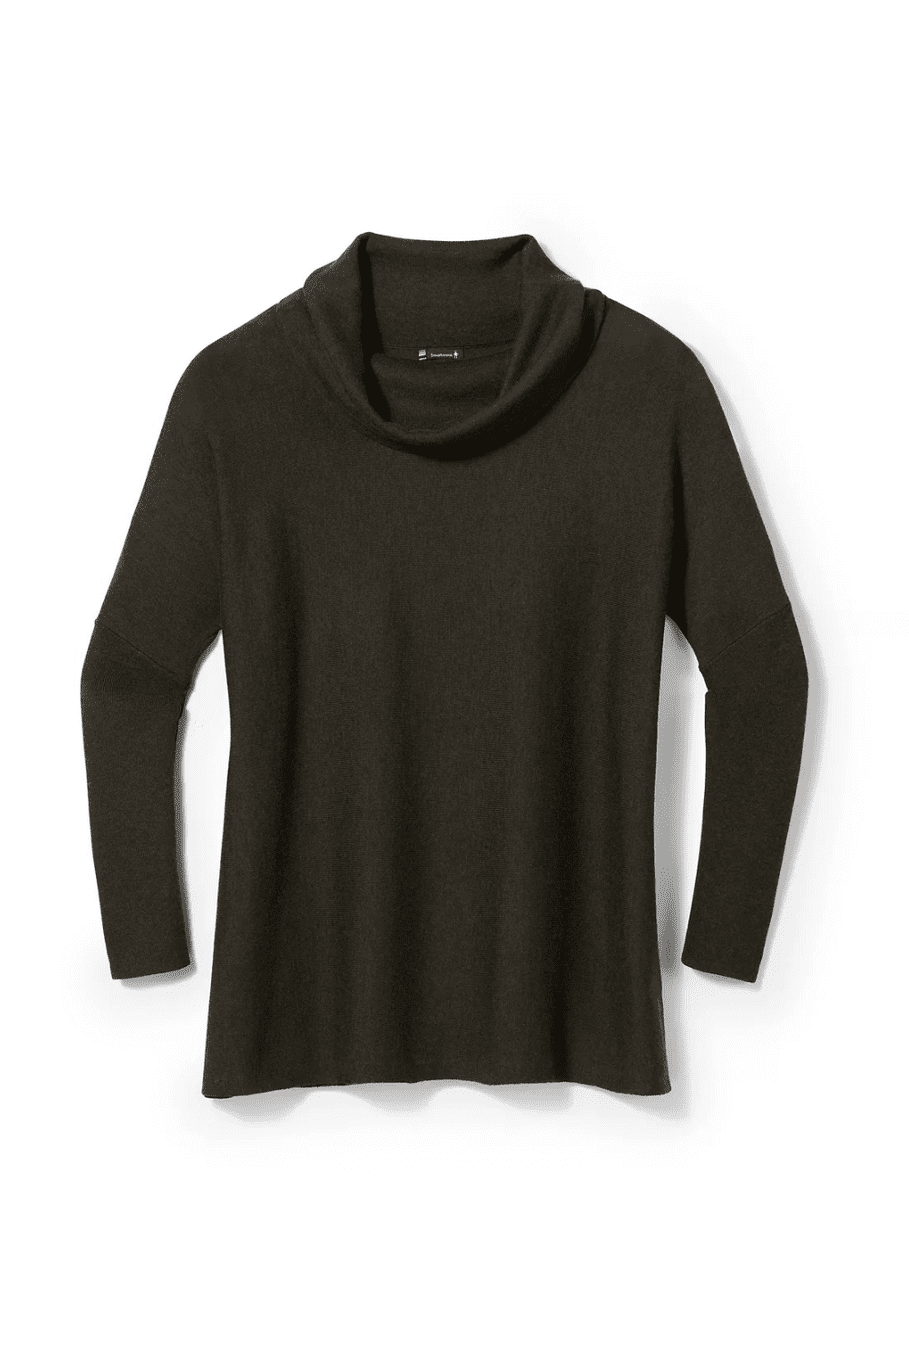 SMARTWOOL Edgewood Poncho Sweater *Final Sale*